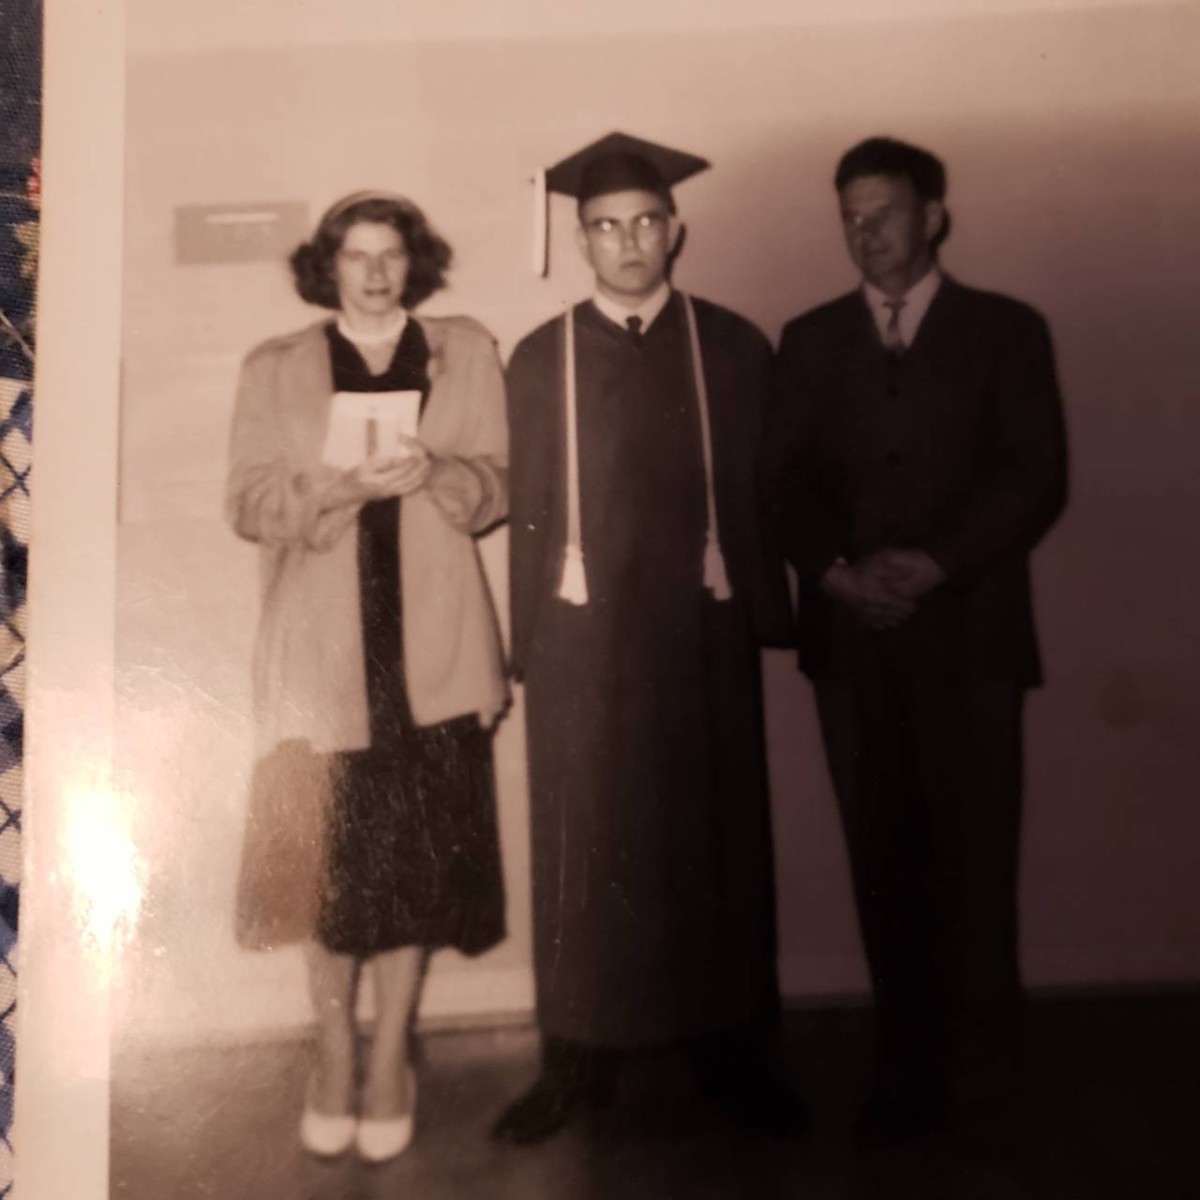 High school graduation 1962.  My mom, author, and dad